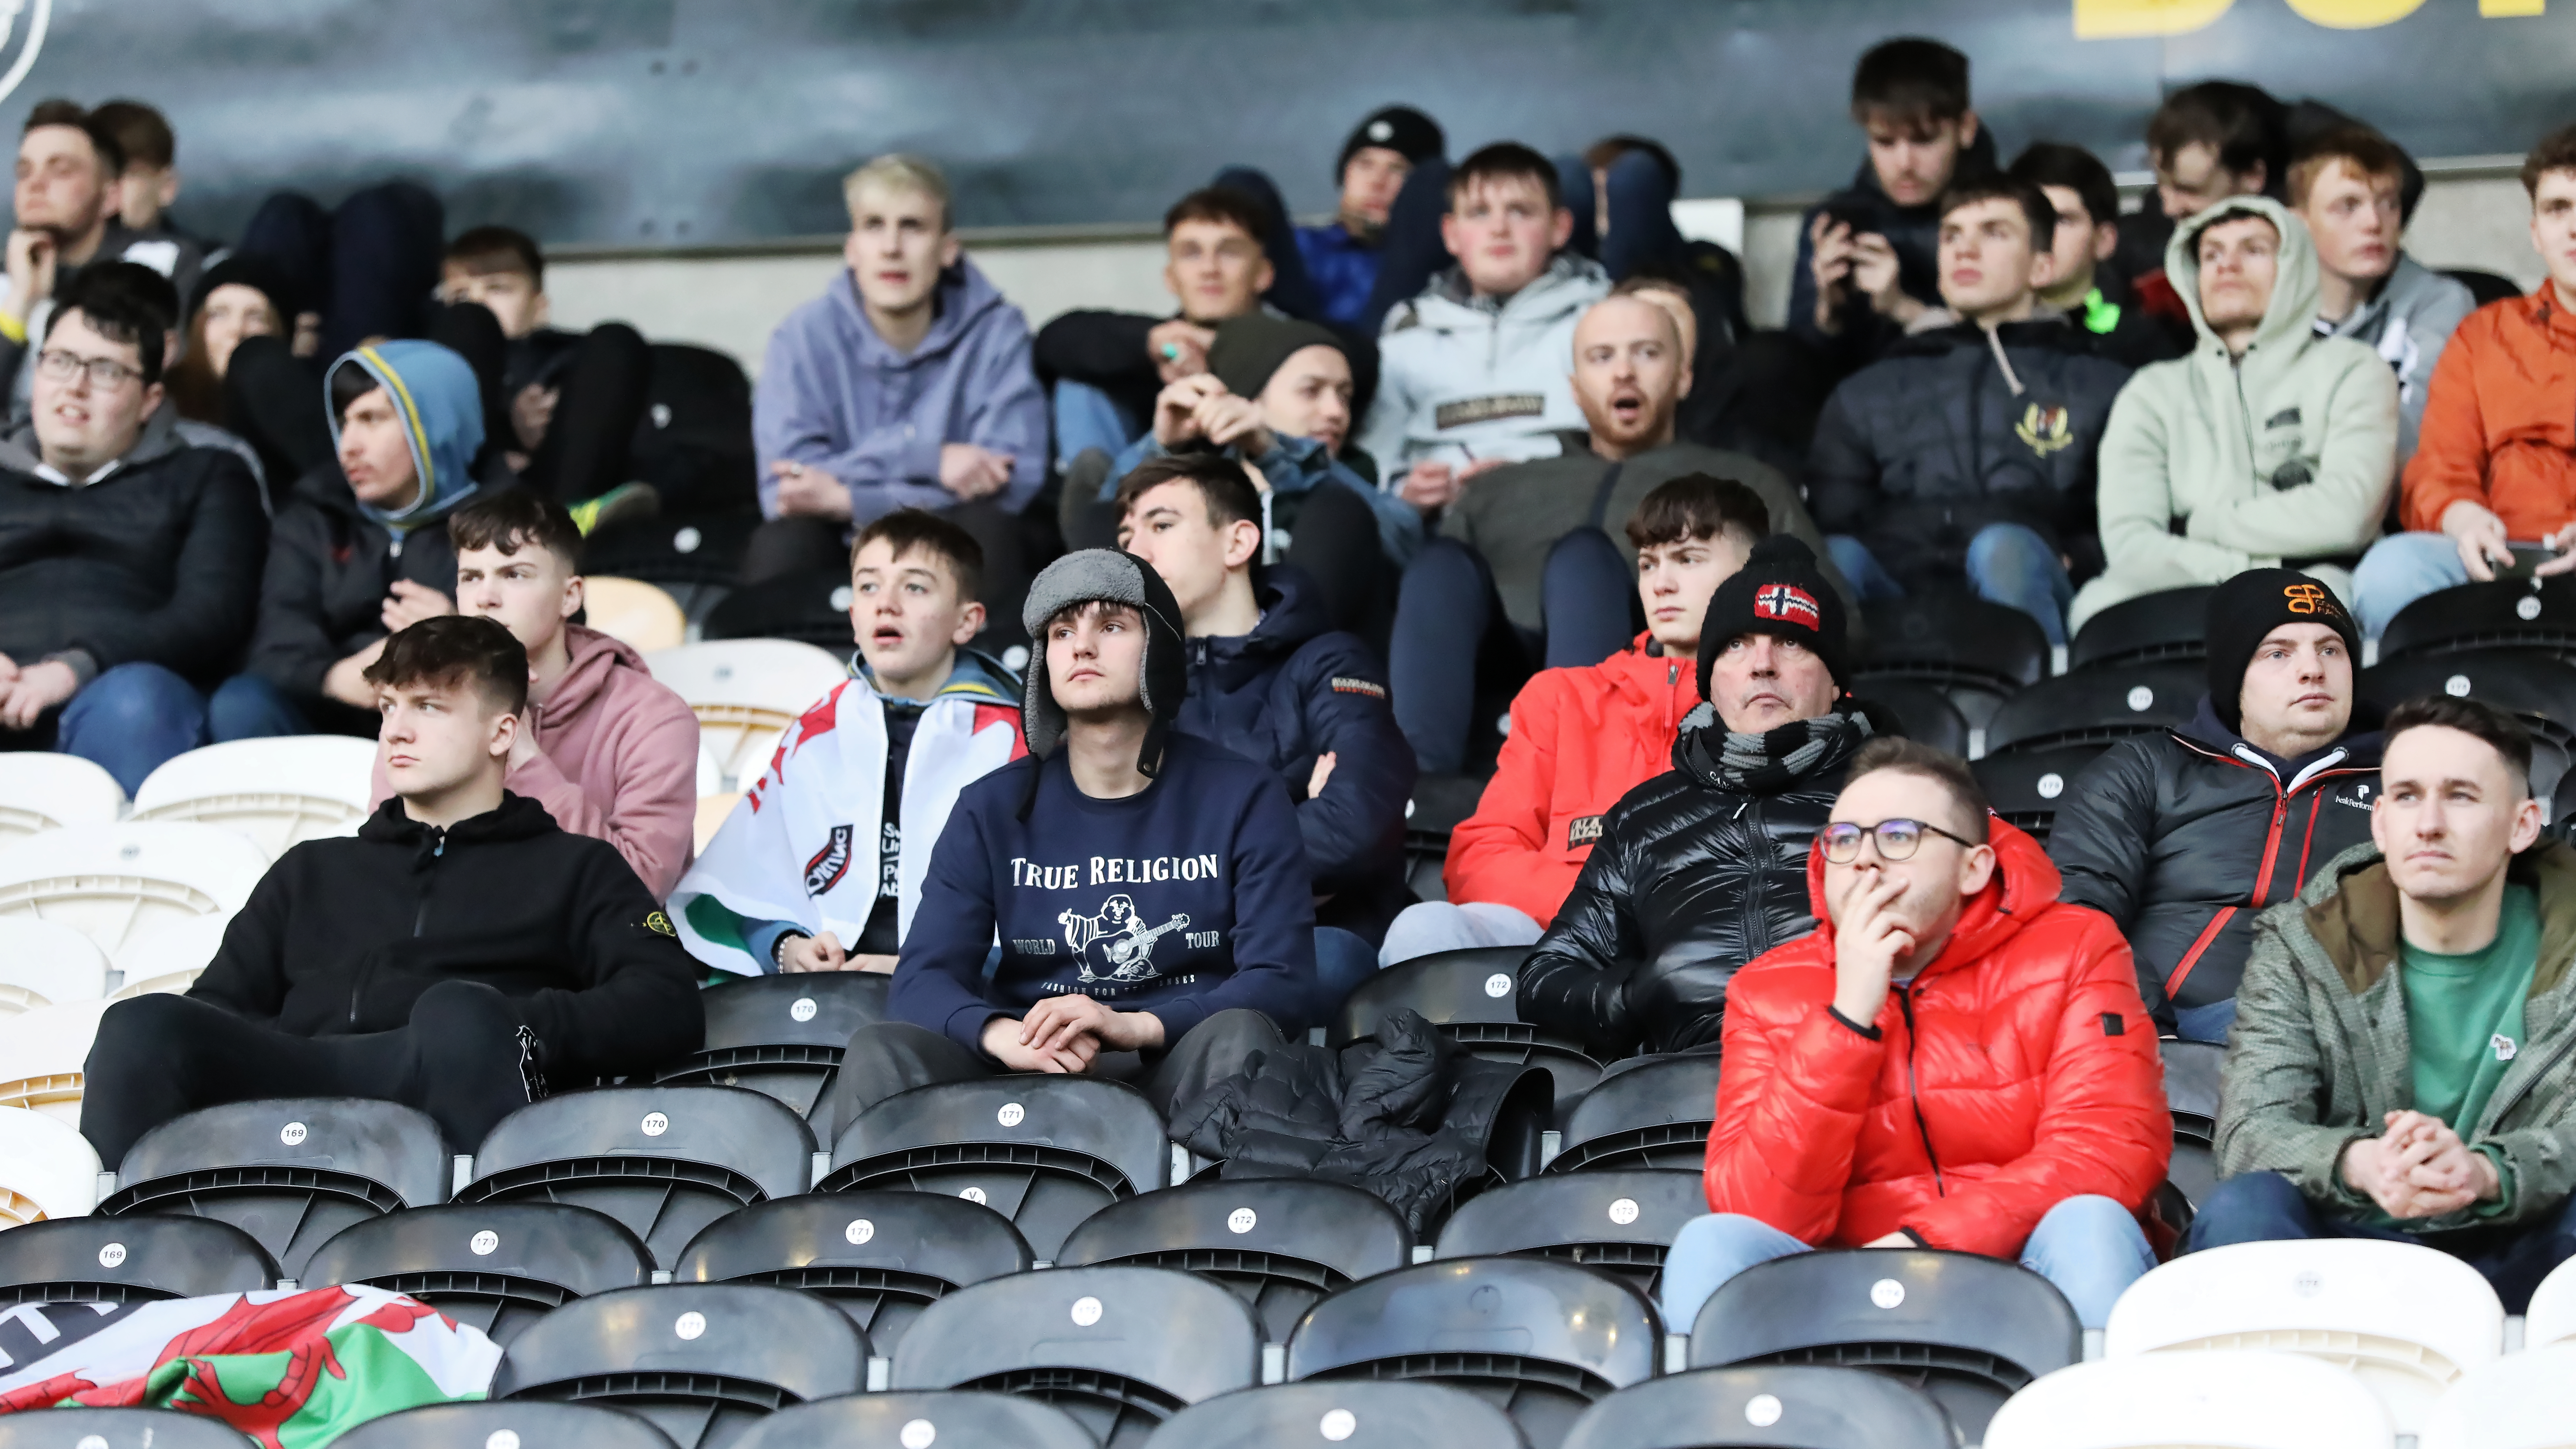 Hull City (a) fans 21-22